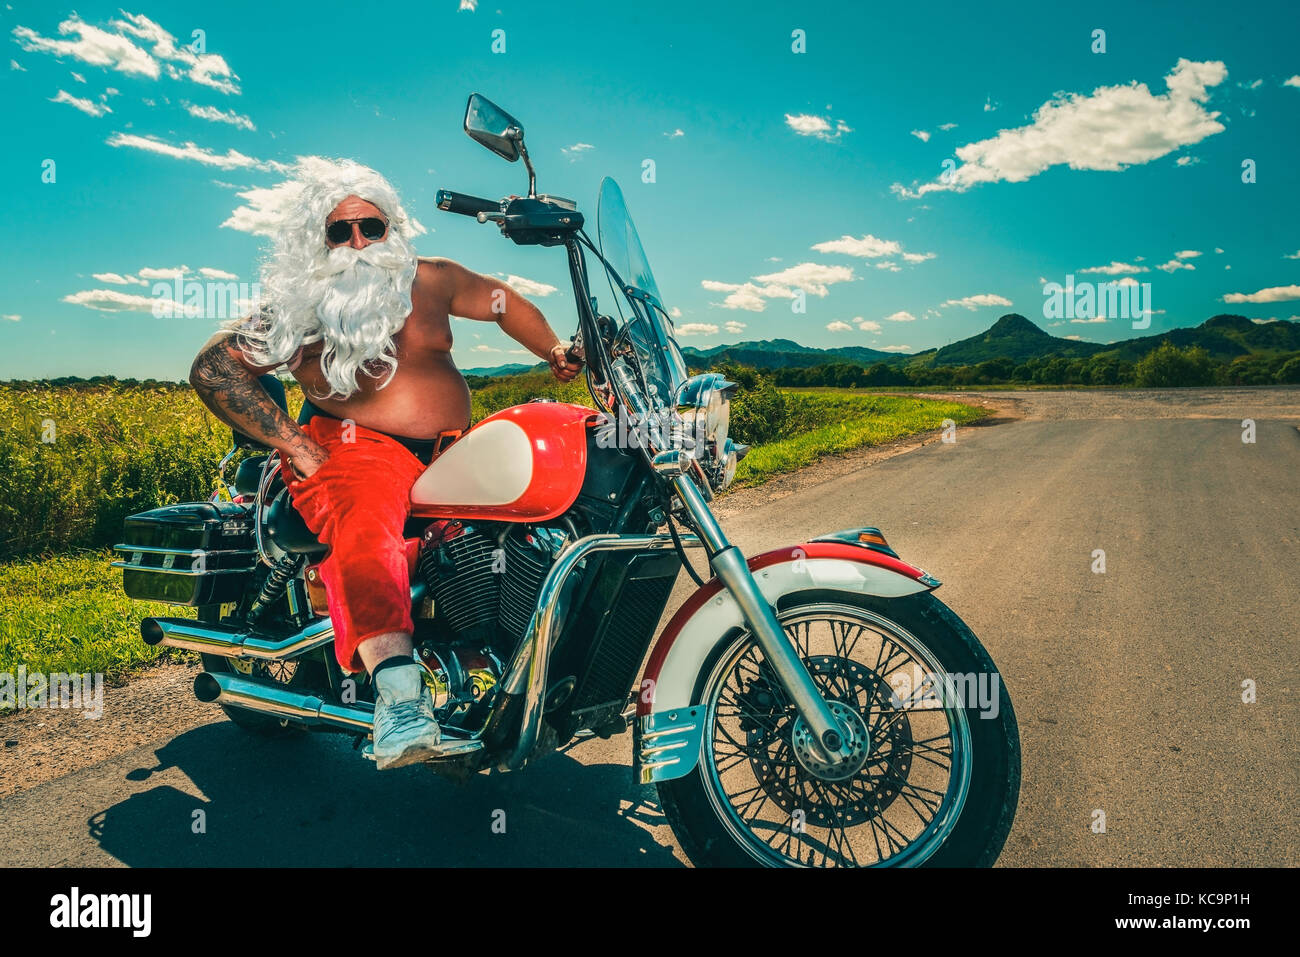 Santa on a motorcycle Stock Photo